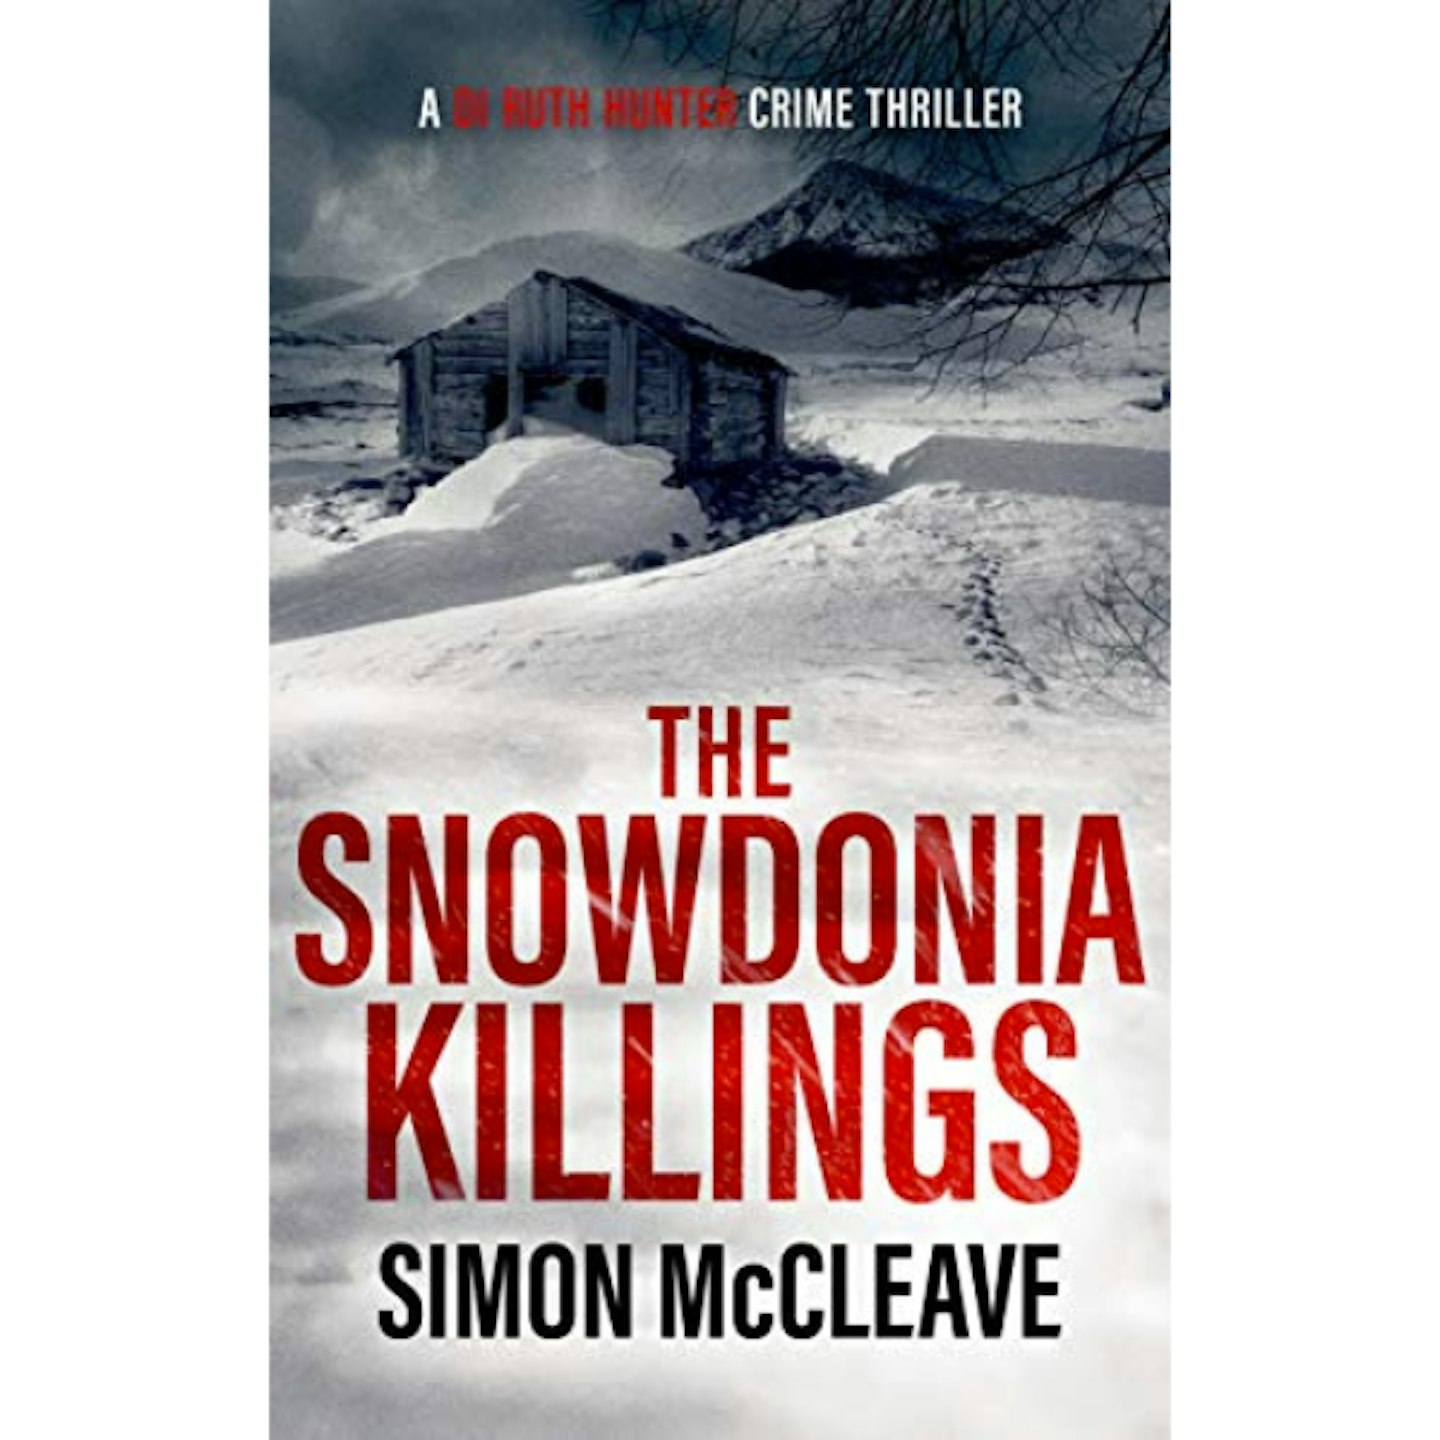 The Snowdonia Killings by Simon McCleave